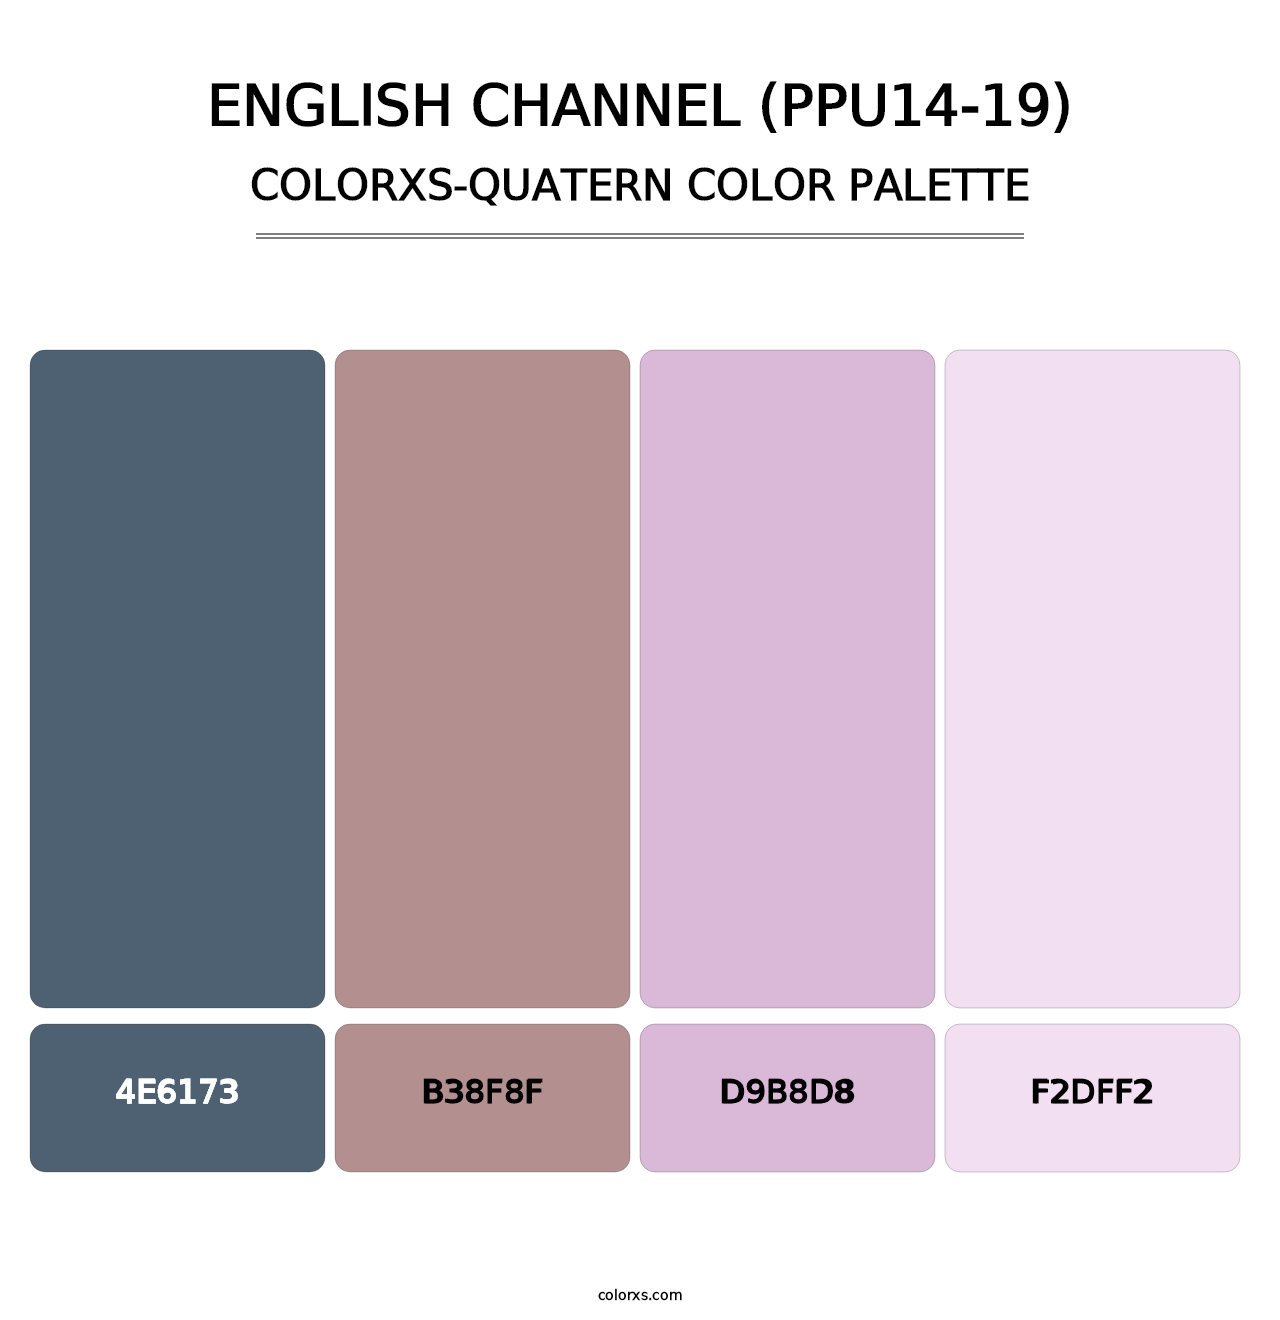 English Channel (PPU14-19) - Colorxs Quatern Palette